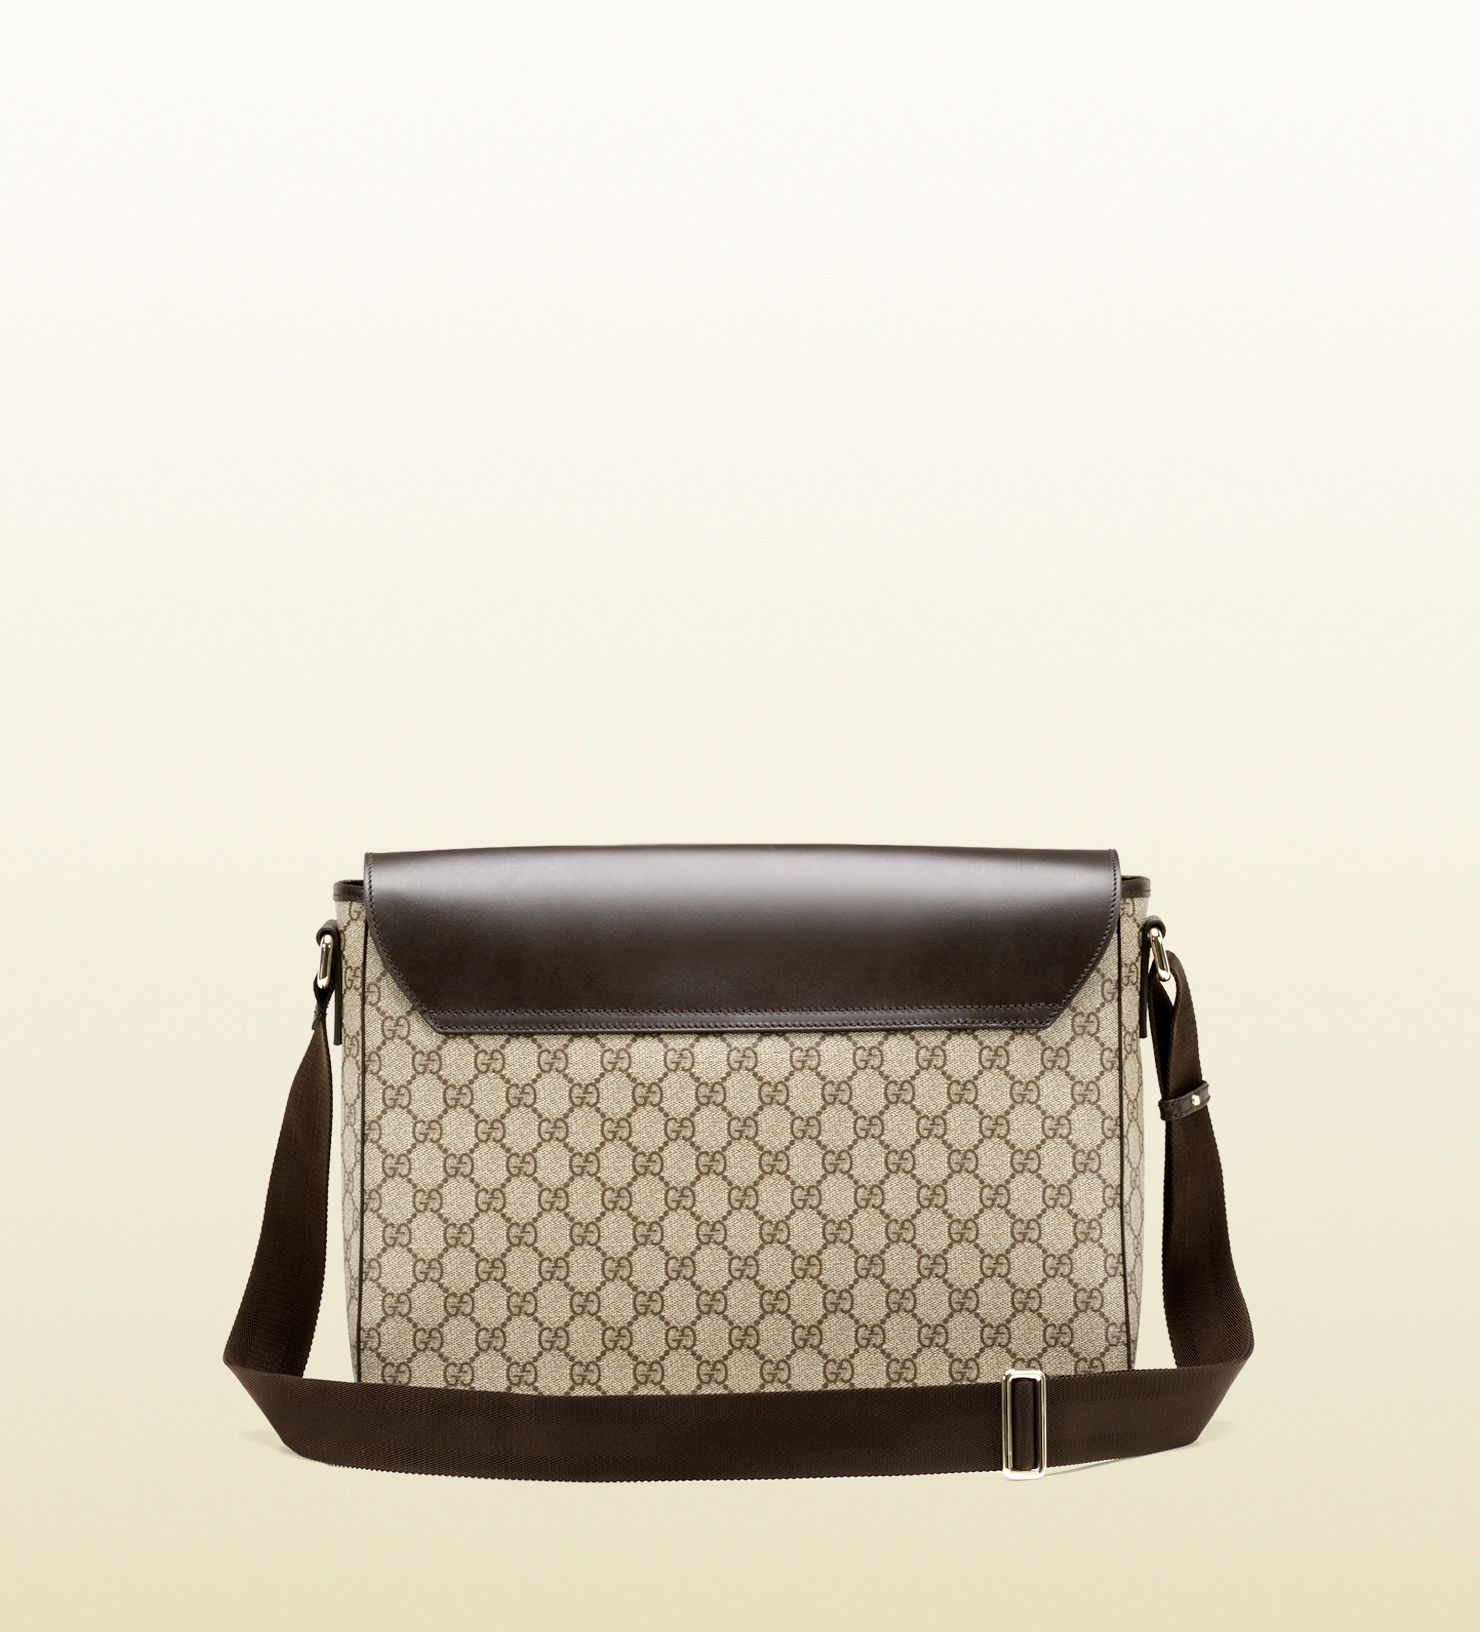 Gucci Gg Supreme Canvas Messenger Bag in Beige (Brown) for Men - Lyst